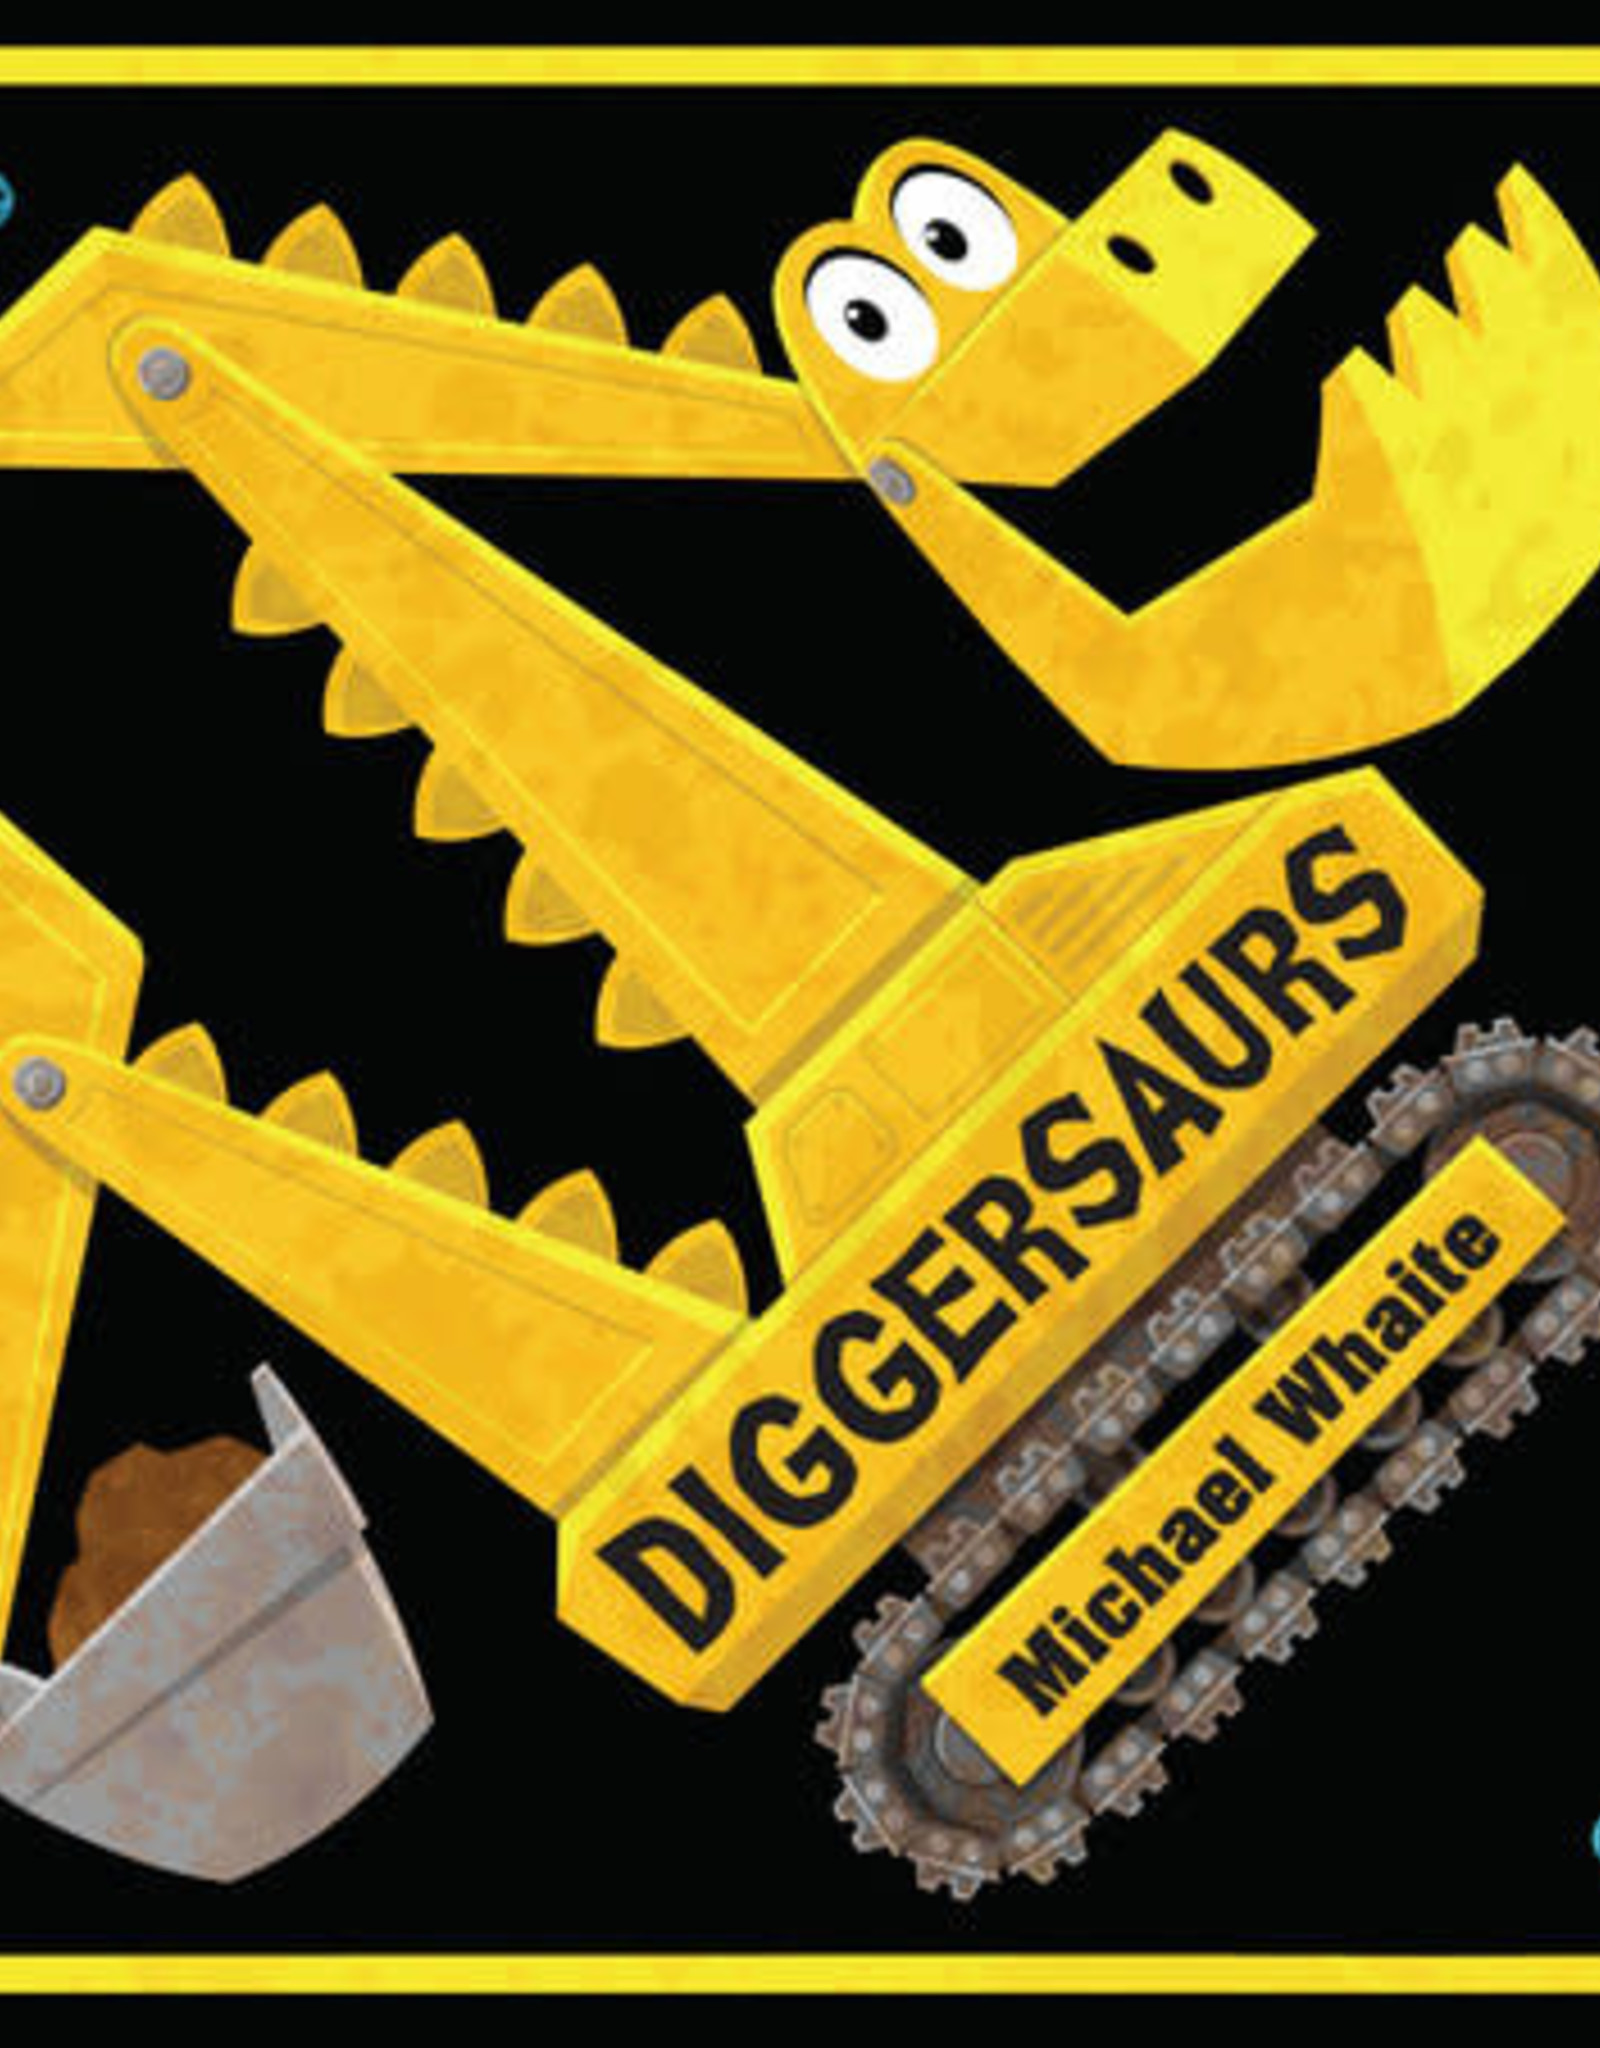 Random House Diggersaurs